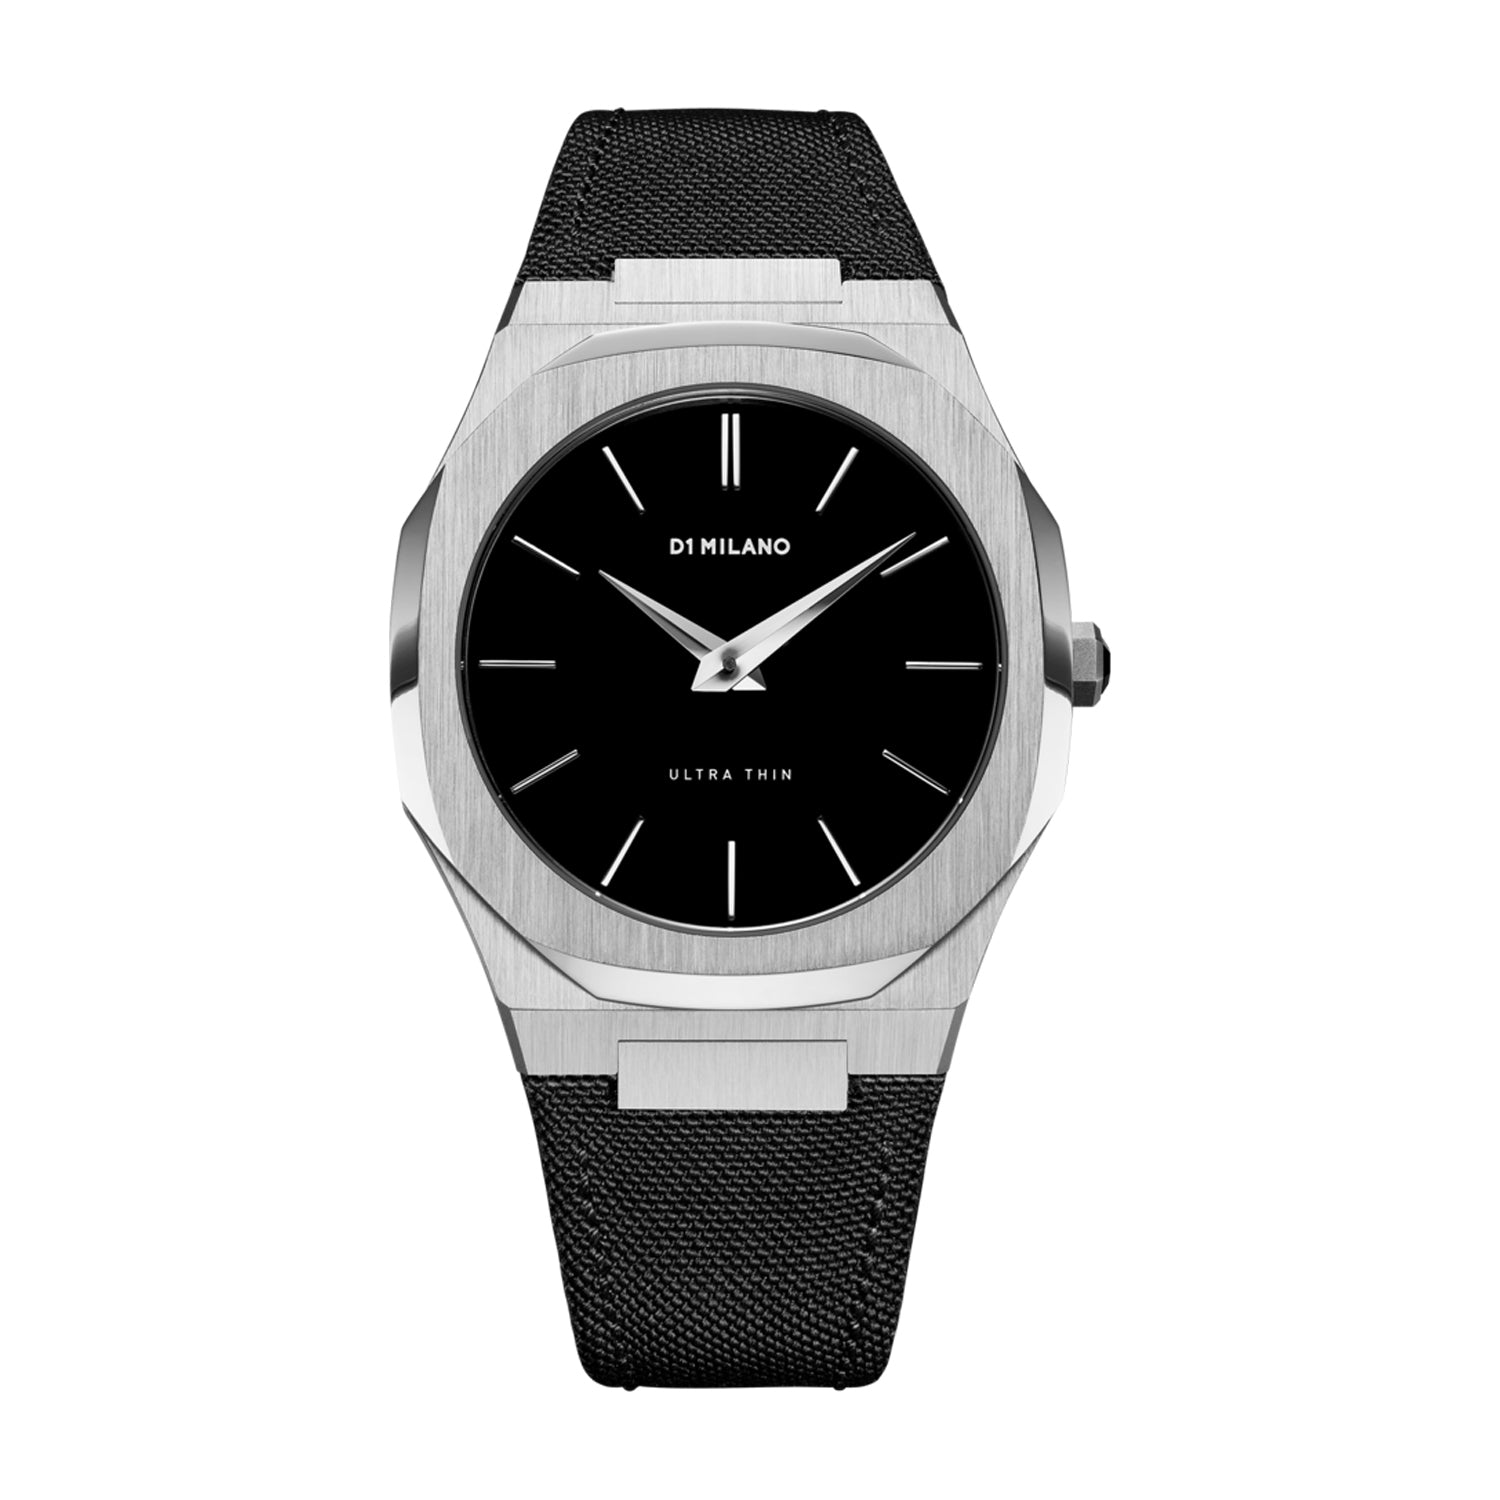 D1 Milano Men's Quartz Watch, Black Dial - ML-0091